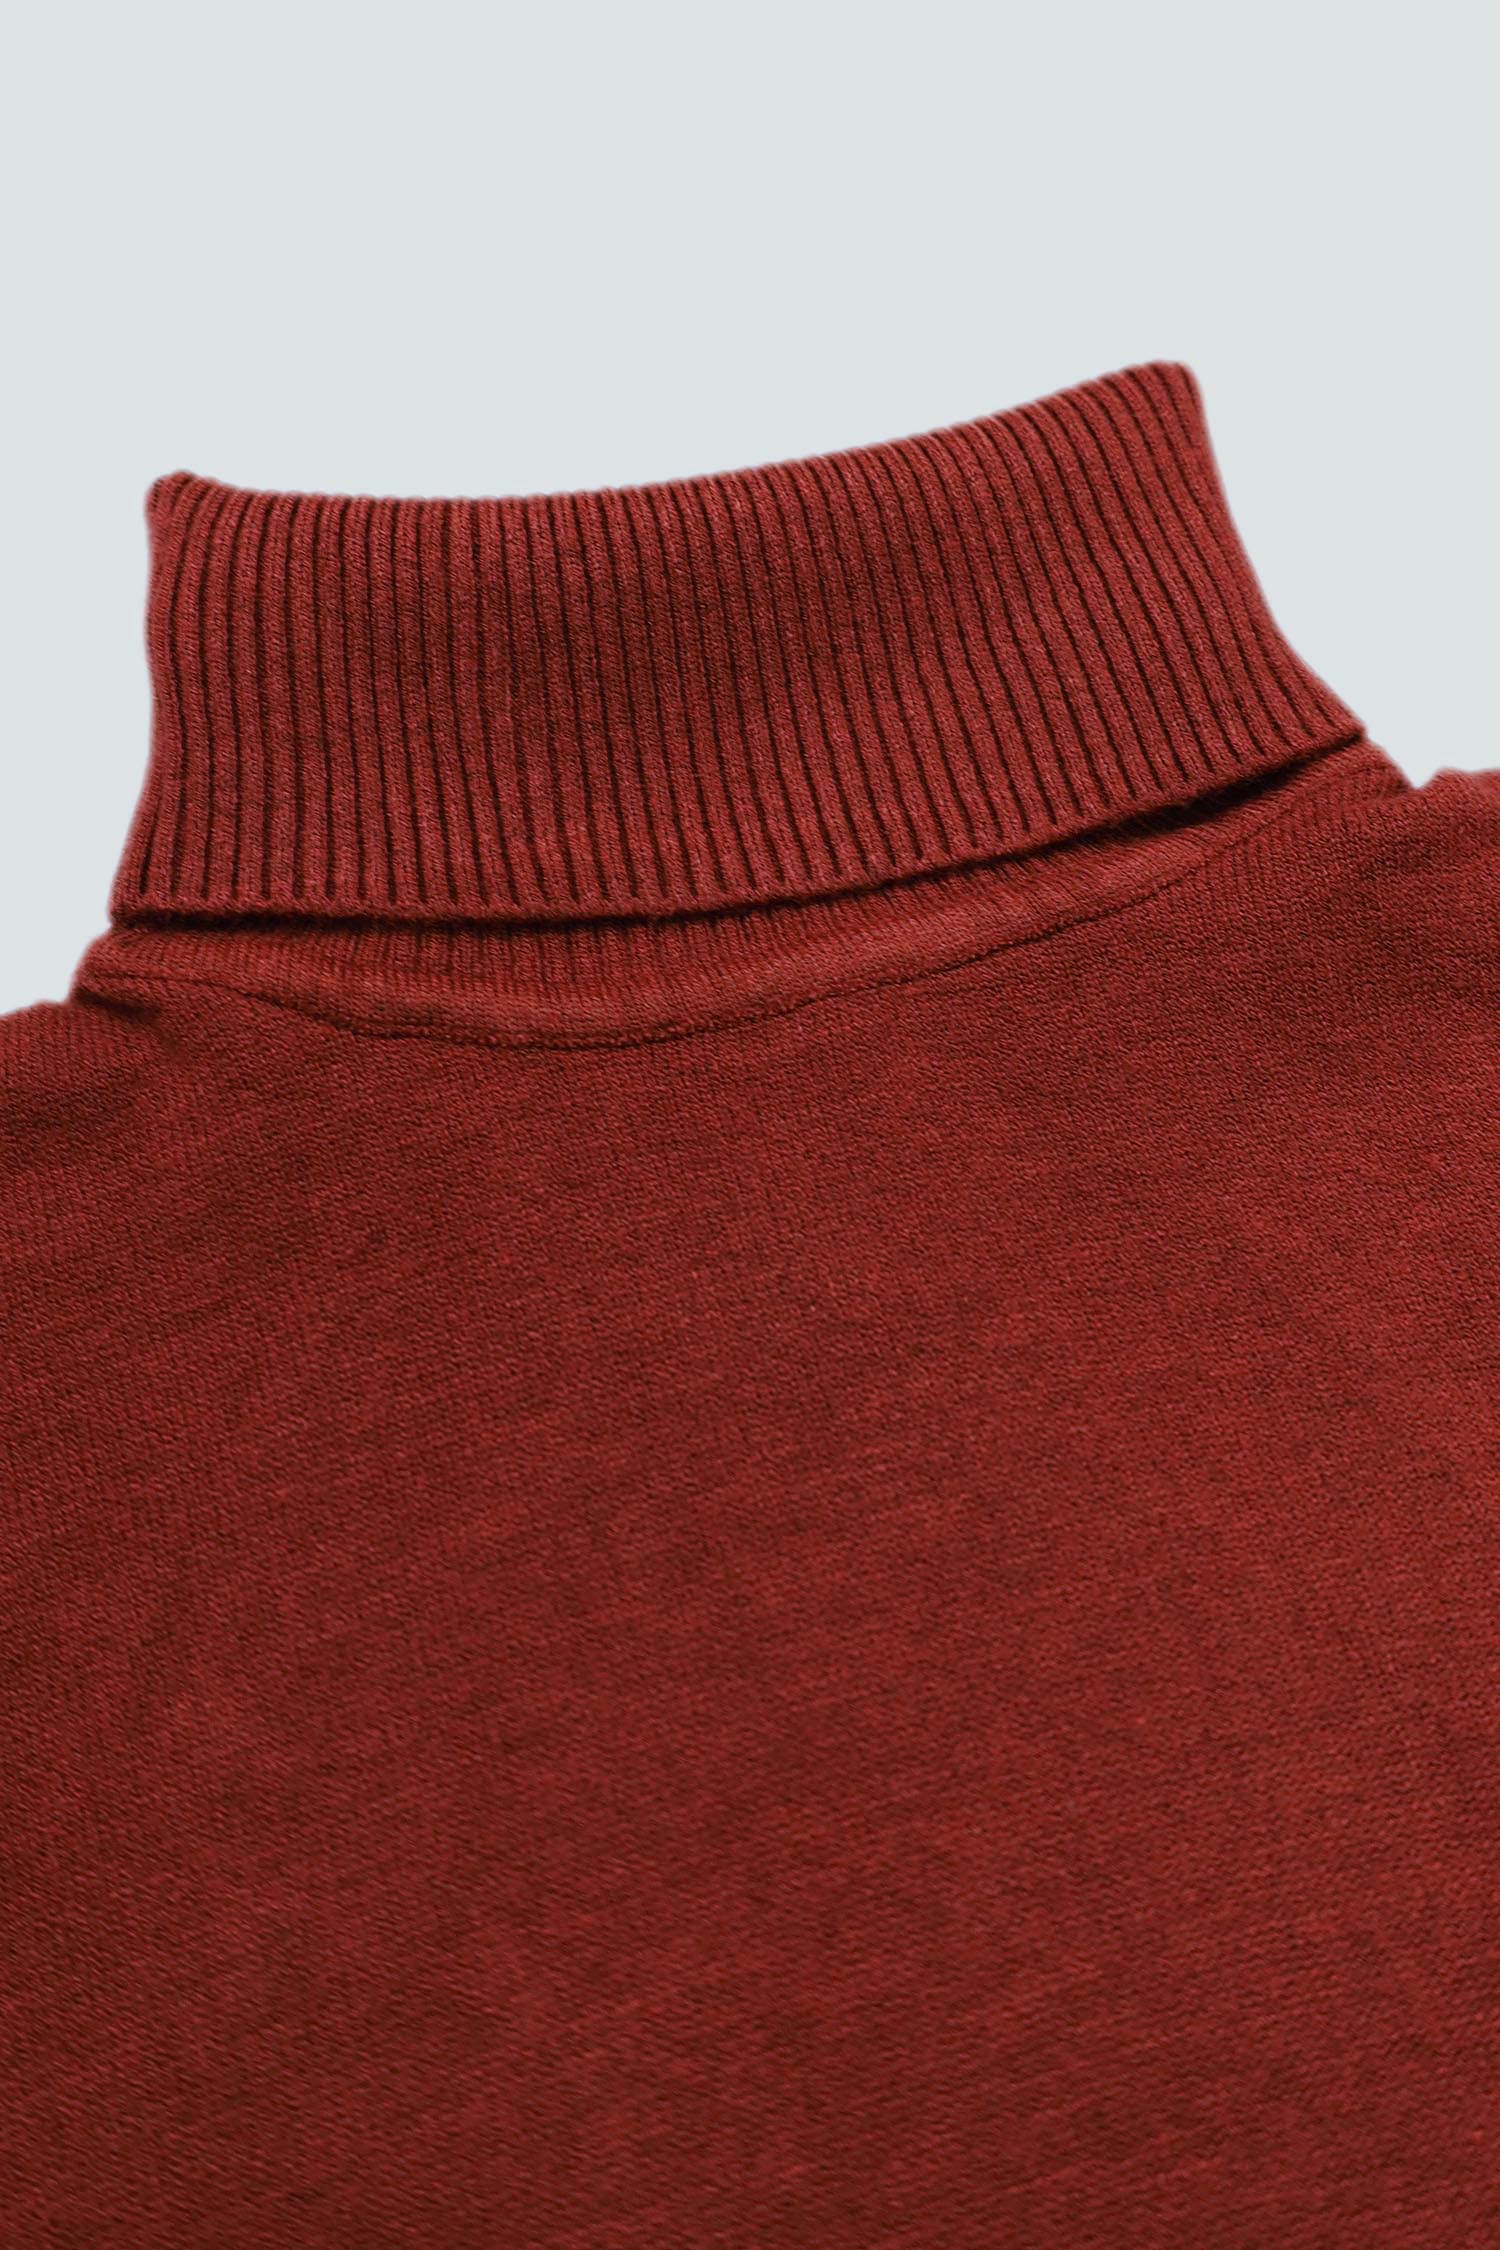 Warm Sweater High Neck